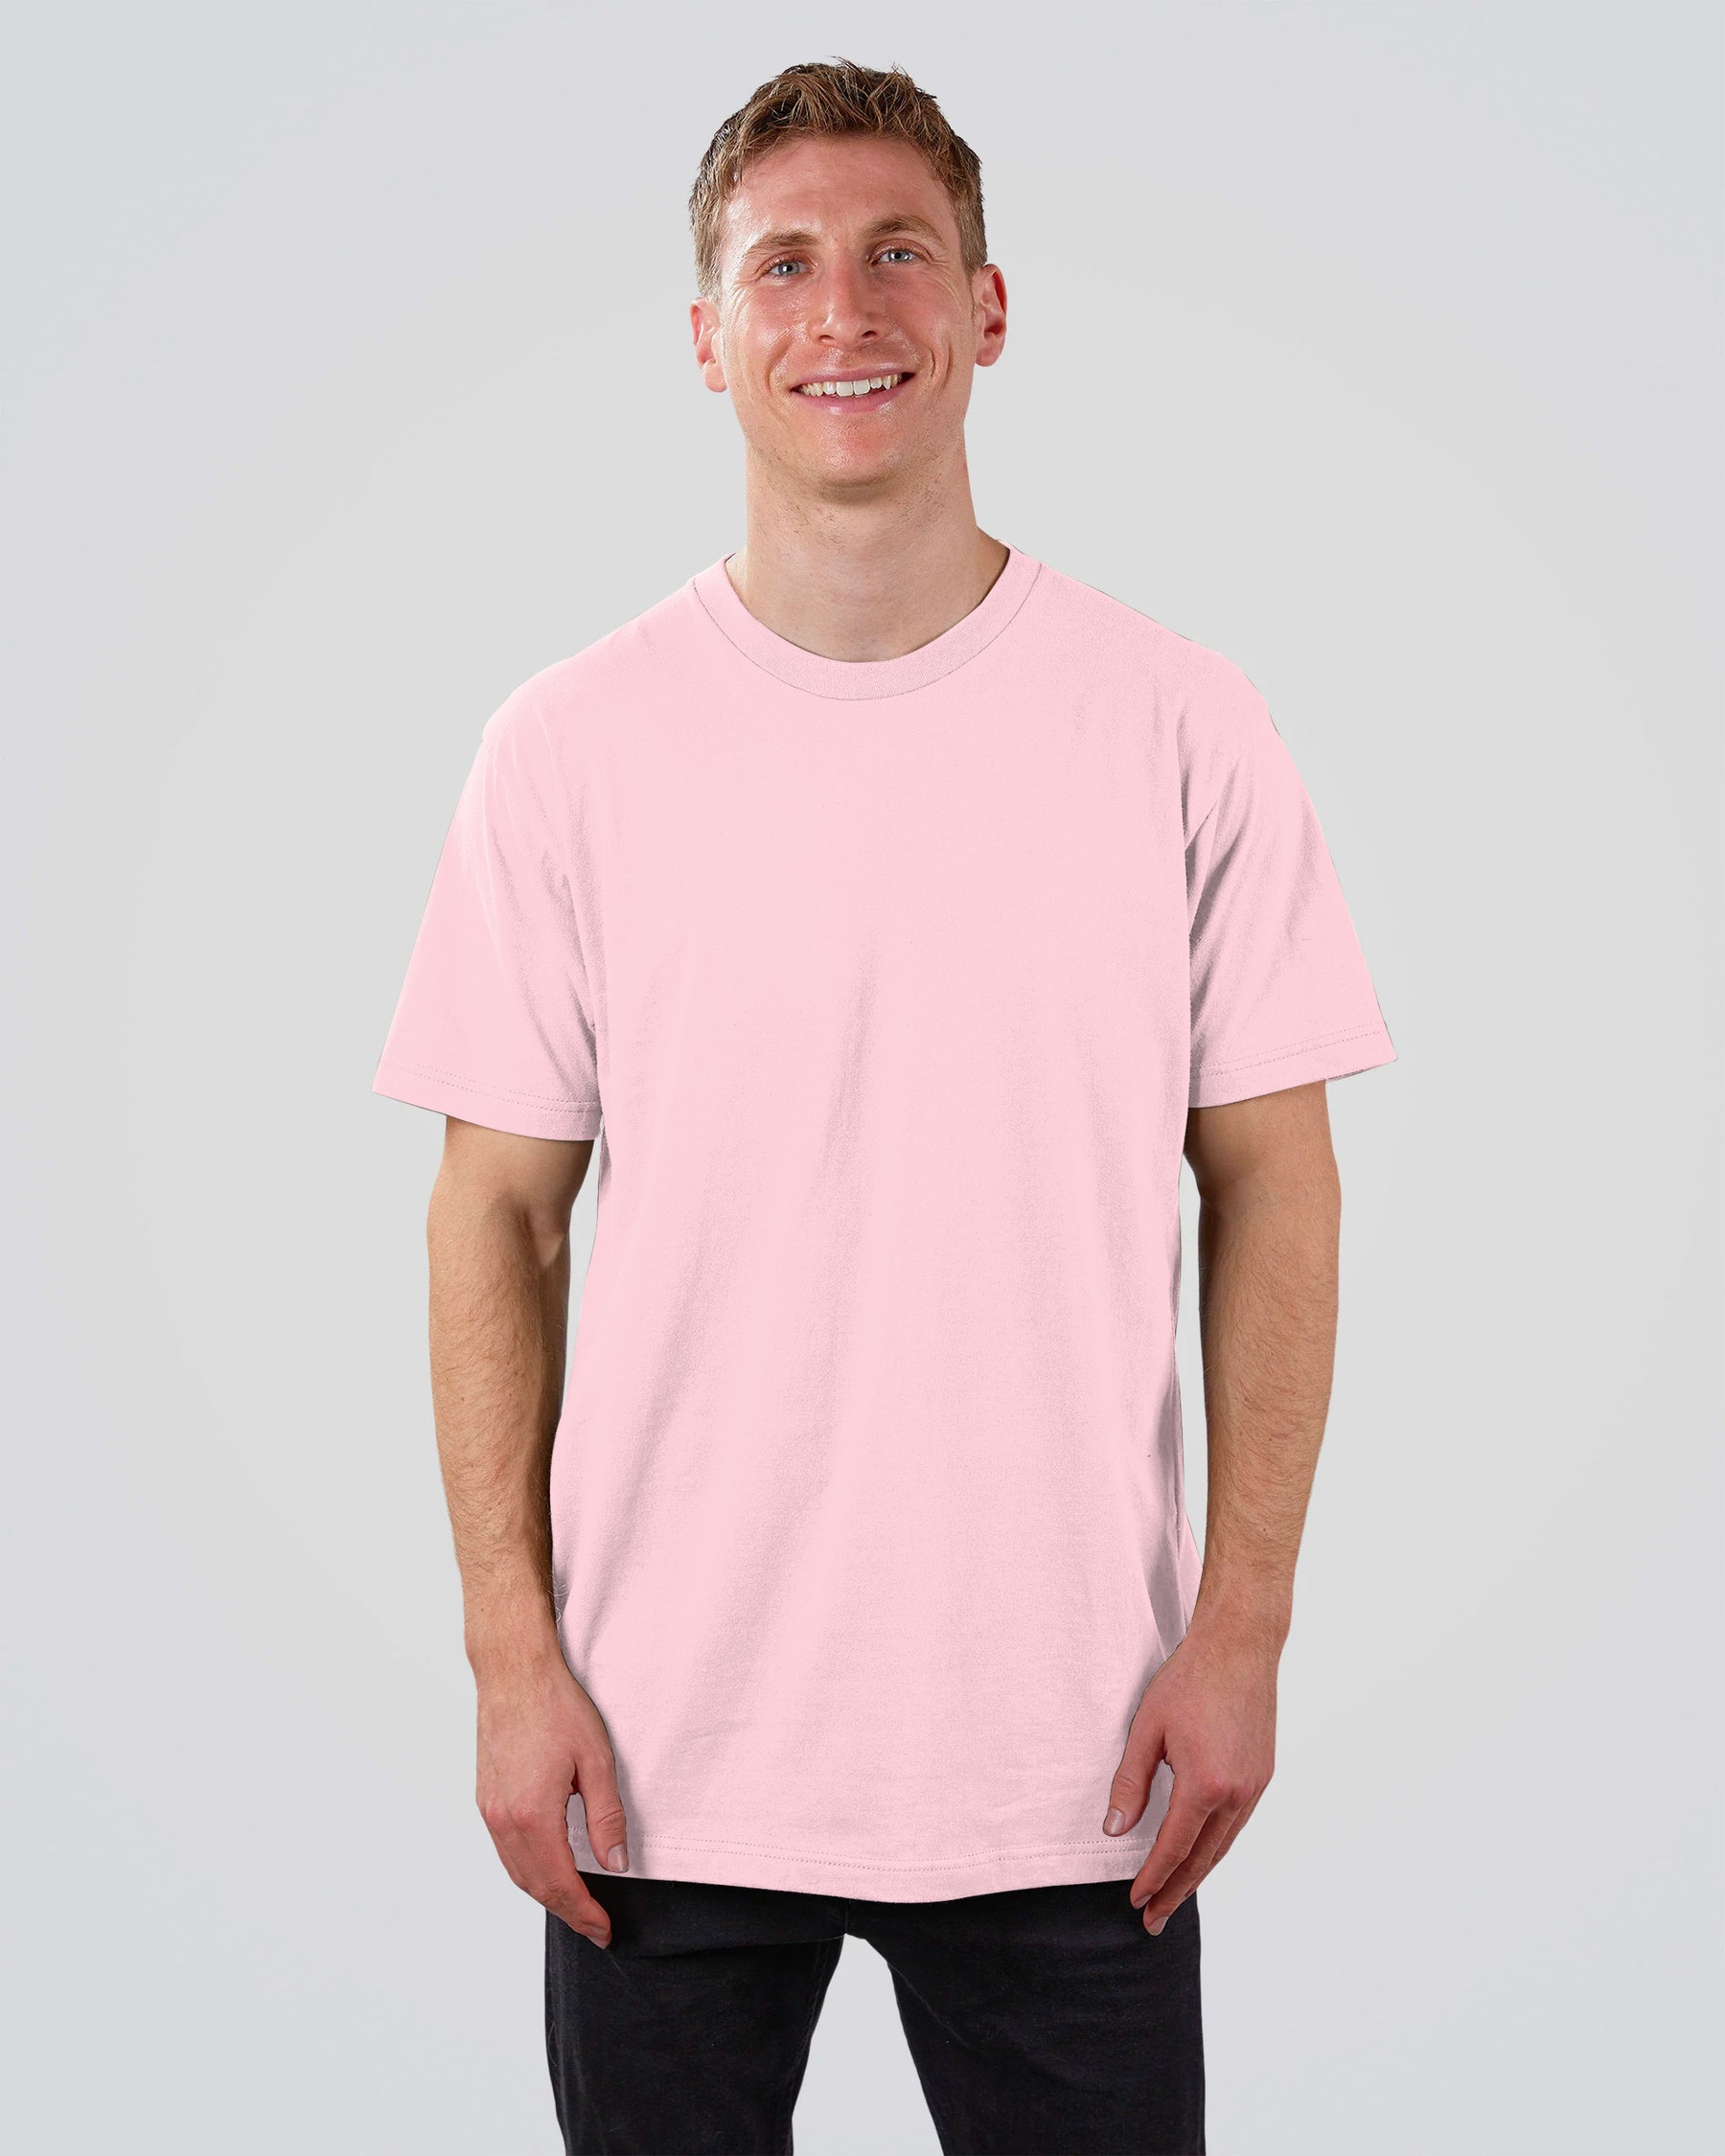 Sweat Proof T-Shirt - Pink - Men's Sweat Proof Shirt (Crewneck) | Social Citizen L - Army Green